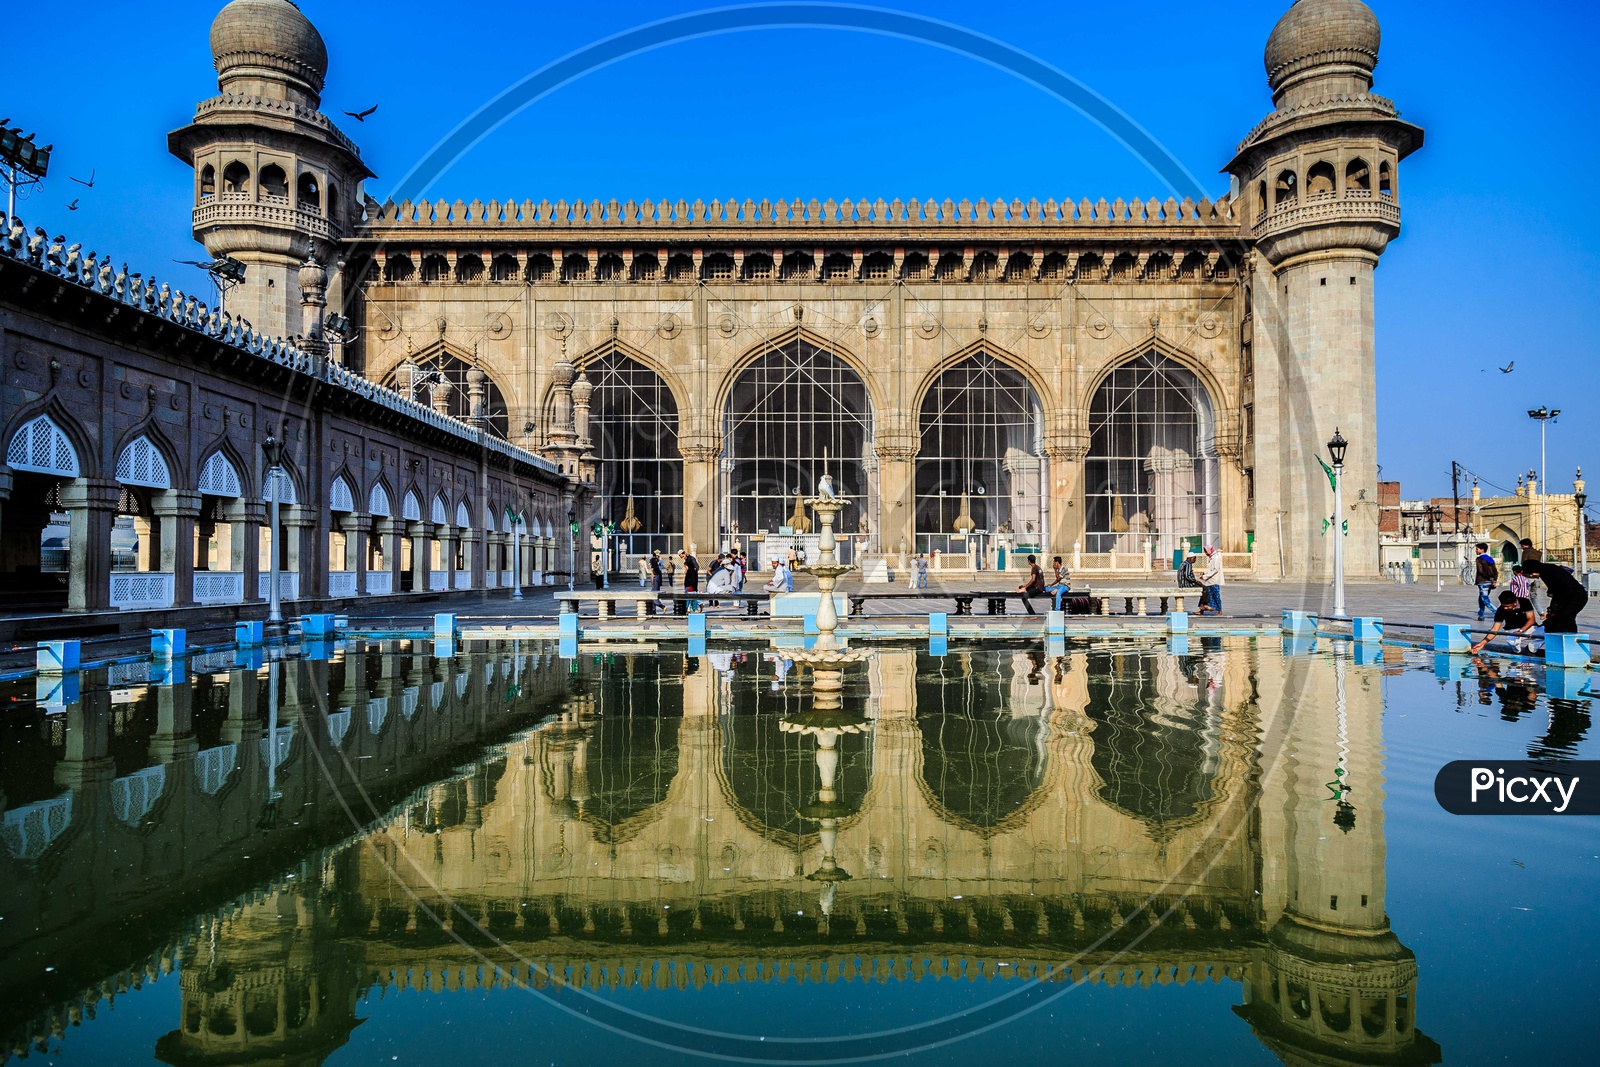 Reflection of Mecca Masjid